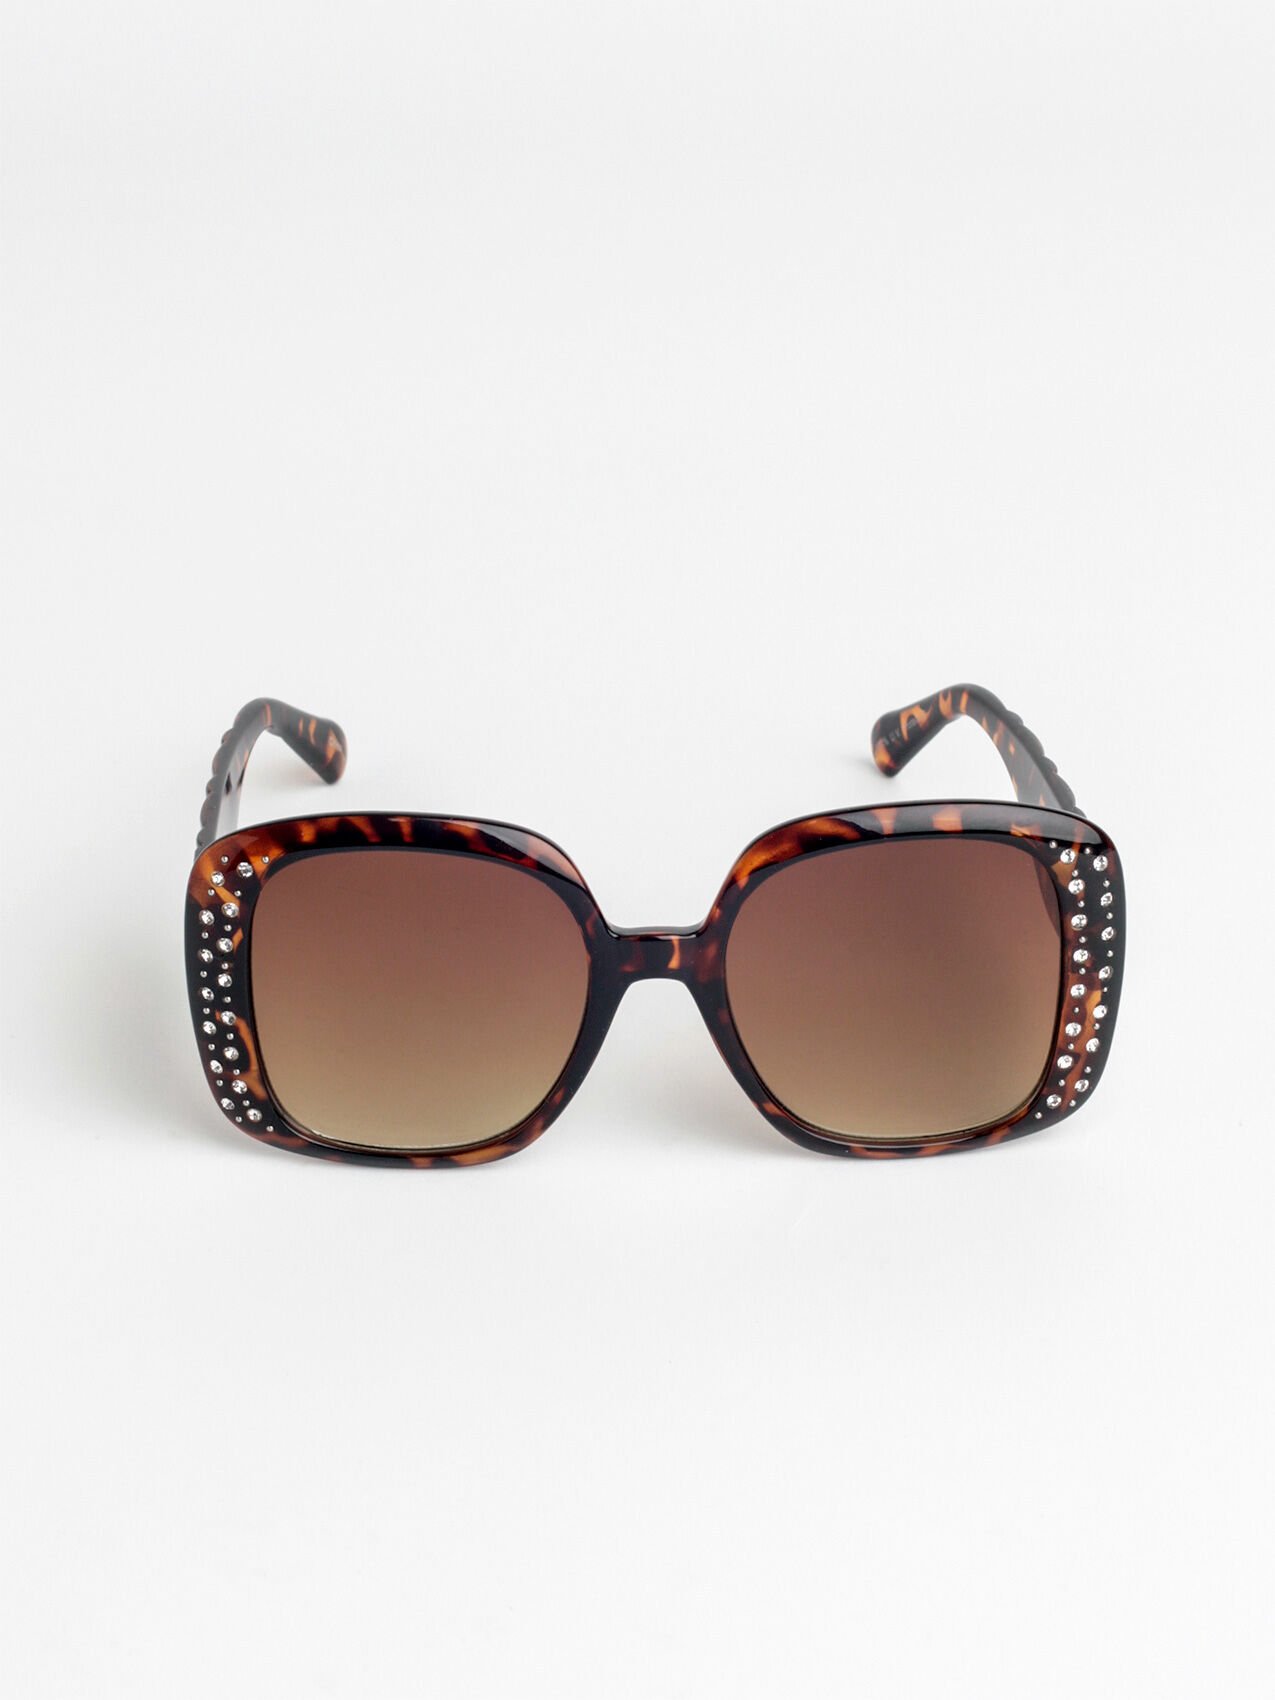 Tortoise Square Frame Sunglasses with Rhinestones